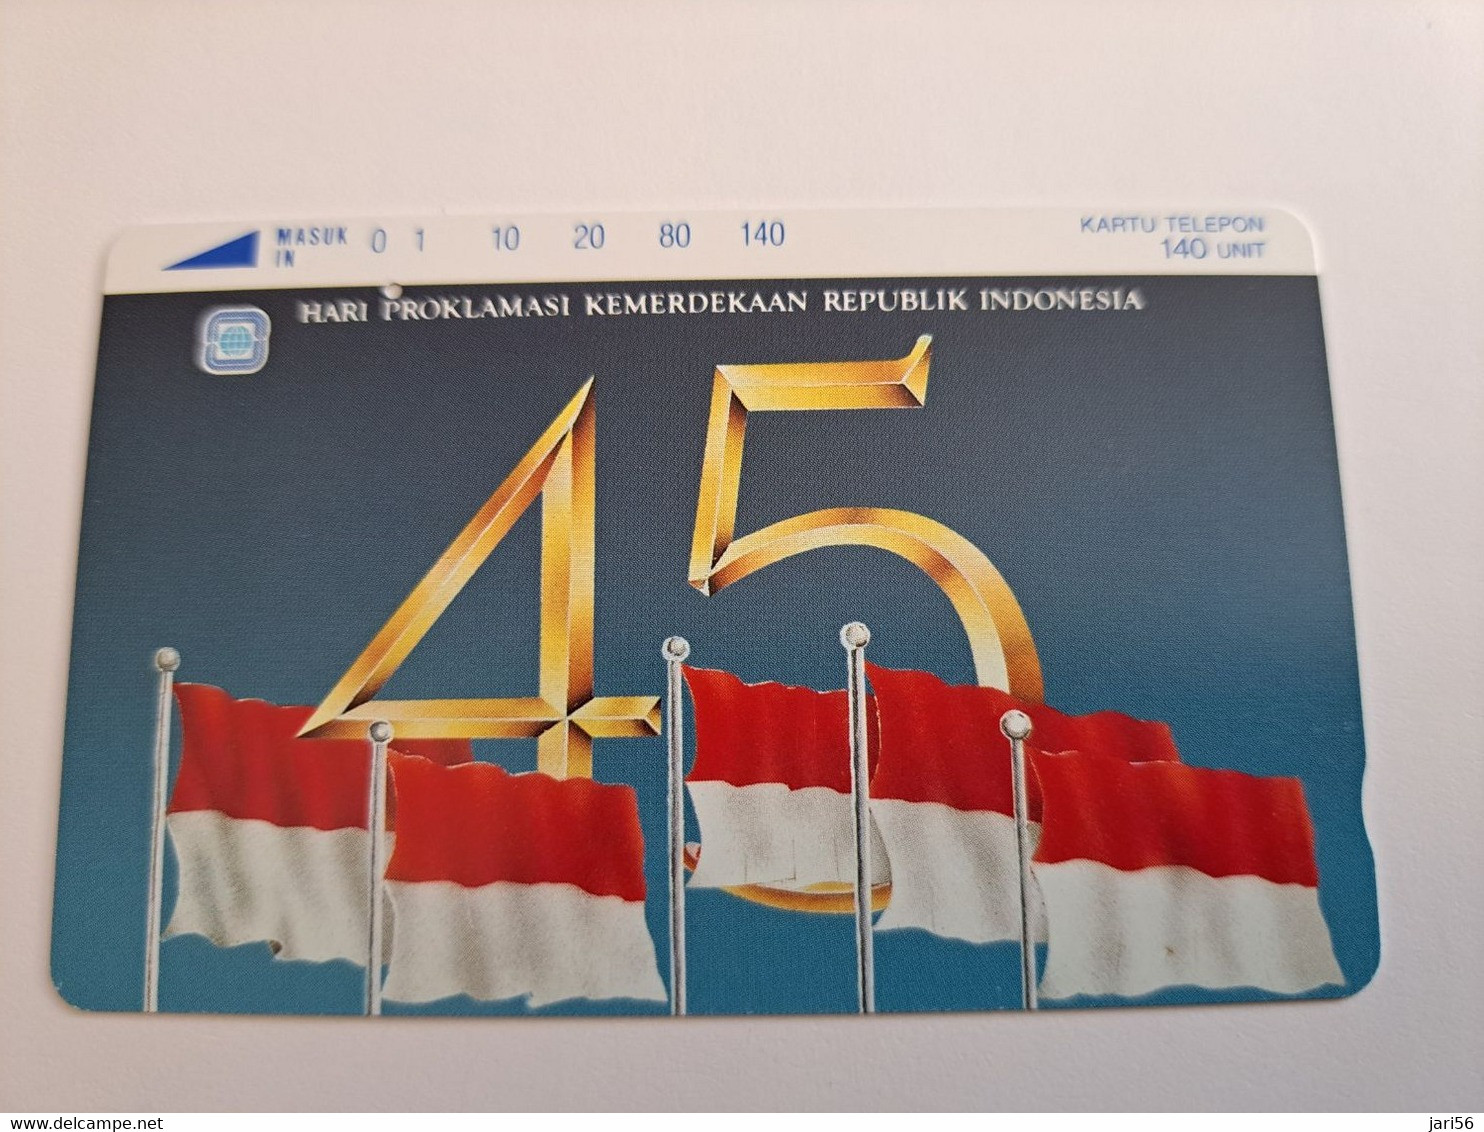 INDONESIA MAGNETIC/TAMURA  140  UNITS /   HARI PROLAMASI KEMERDEKAAN REP INDONESIA     MAGNETIC   CARD    **9796** - Indonesia